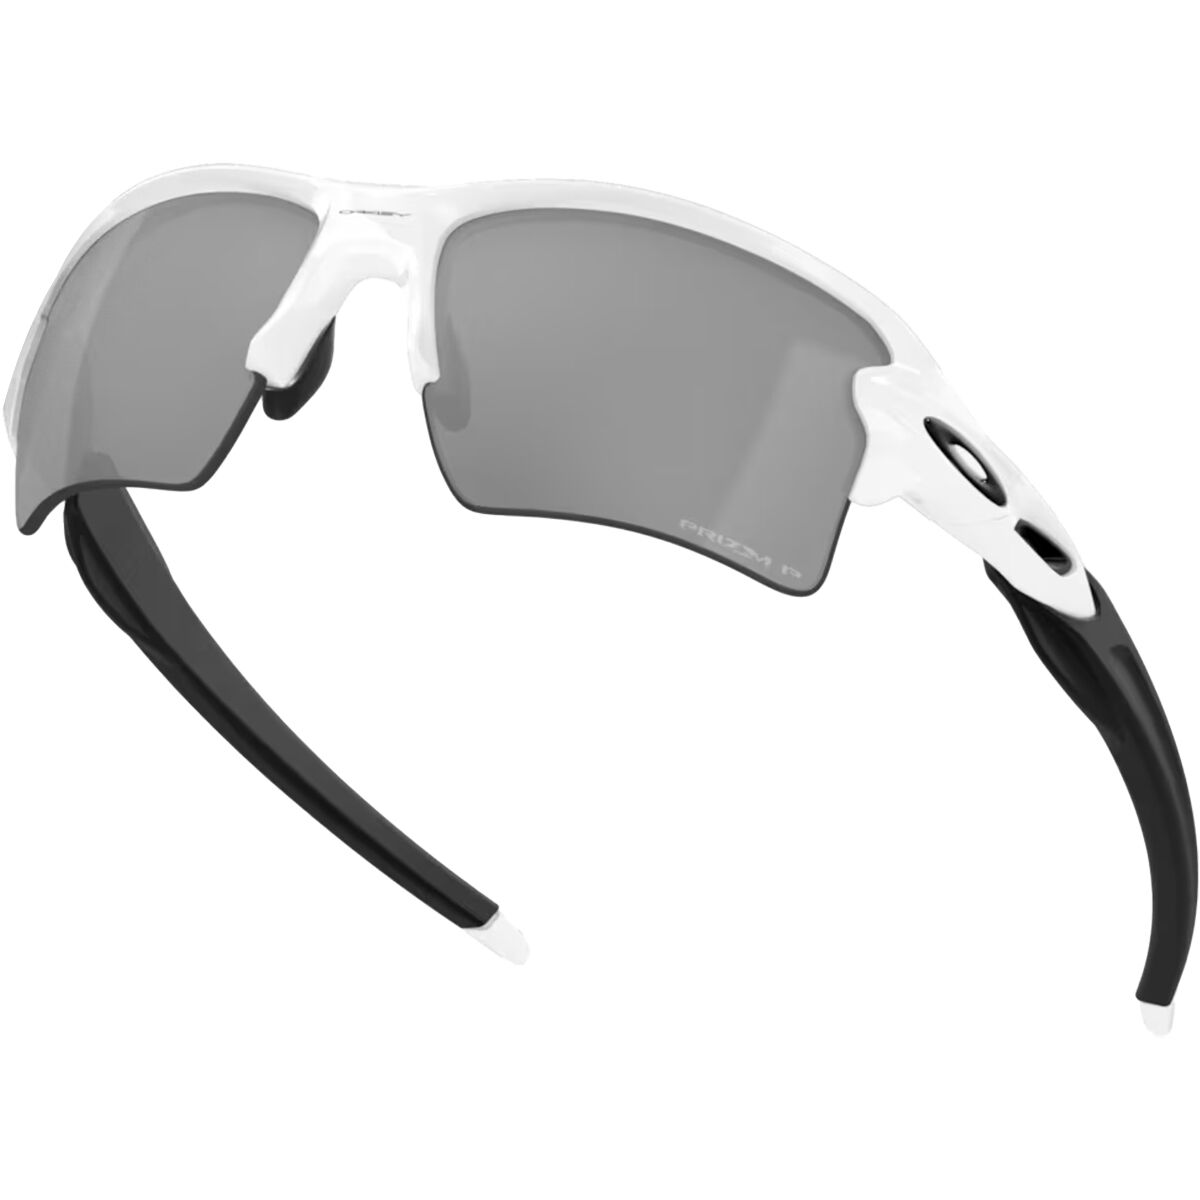 Oakley Flak 2.0 XL Sunglasses (Polished White) (Prizm Sapphire Iridium Lens)